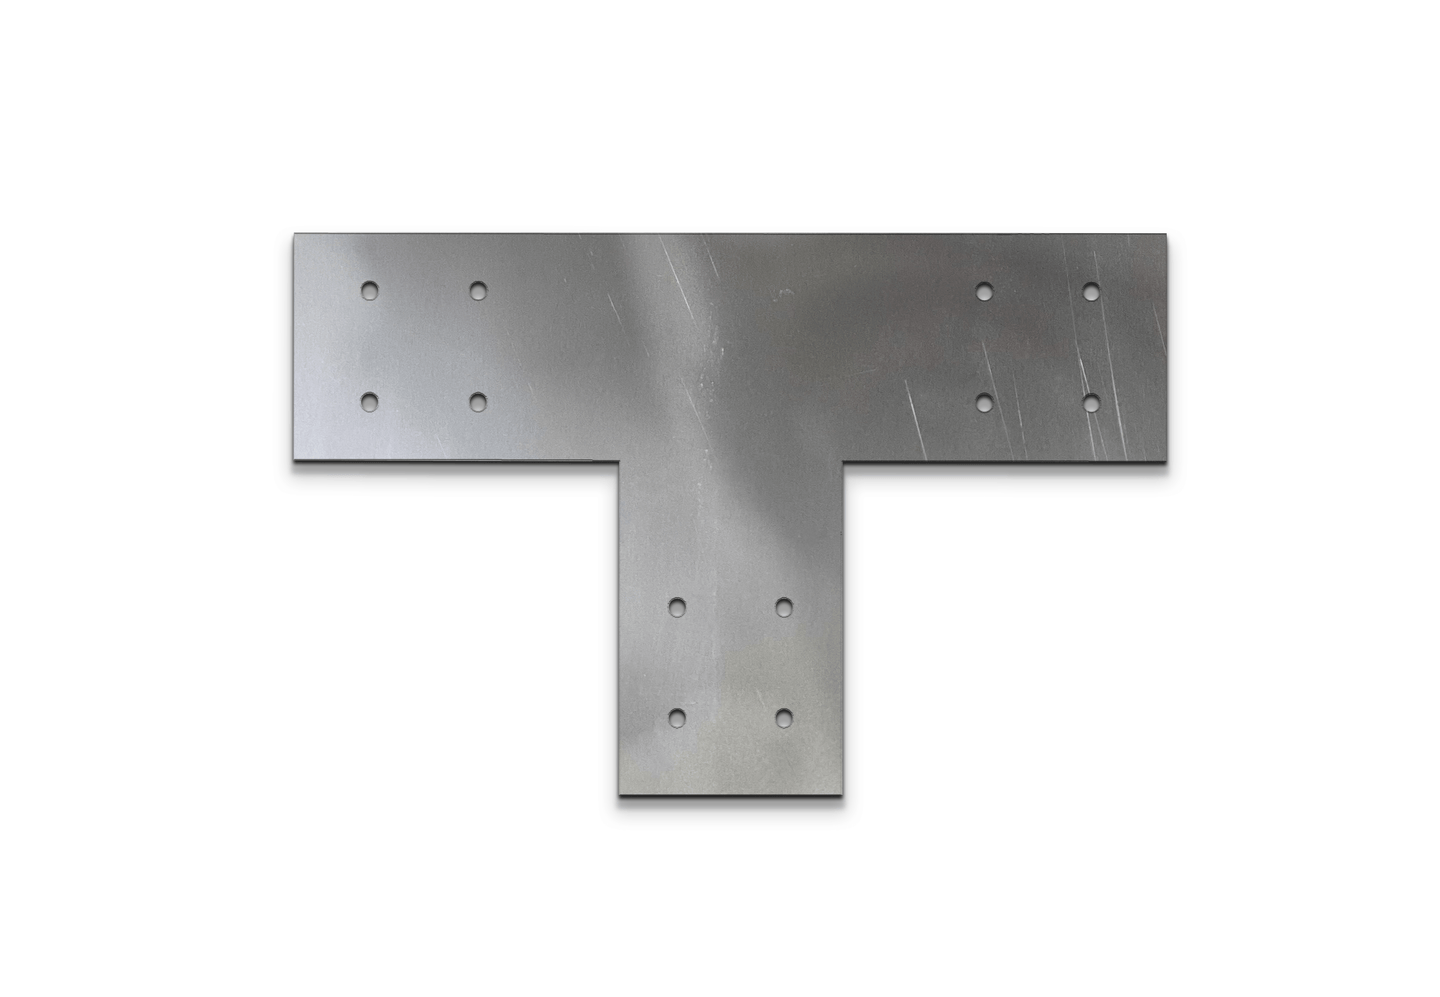 Structural Design T Bracket for 4x4 Post, 4 Inch T Bracket Bolt Plate, T Support Bracket, Steel Bracket, 4 inch, Center Bracket, Truss Plate